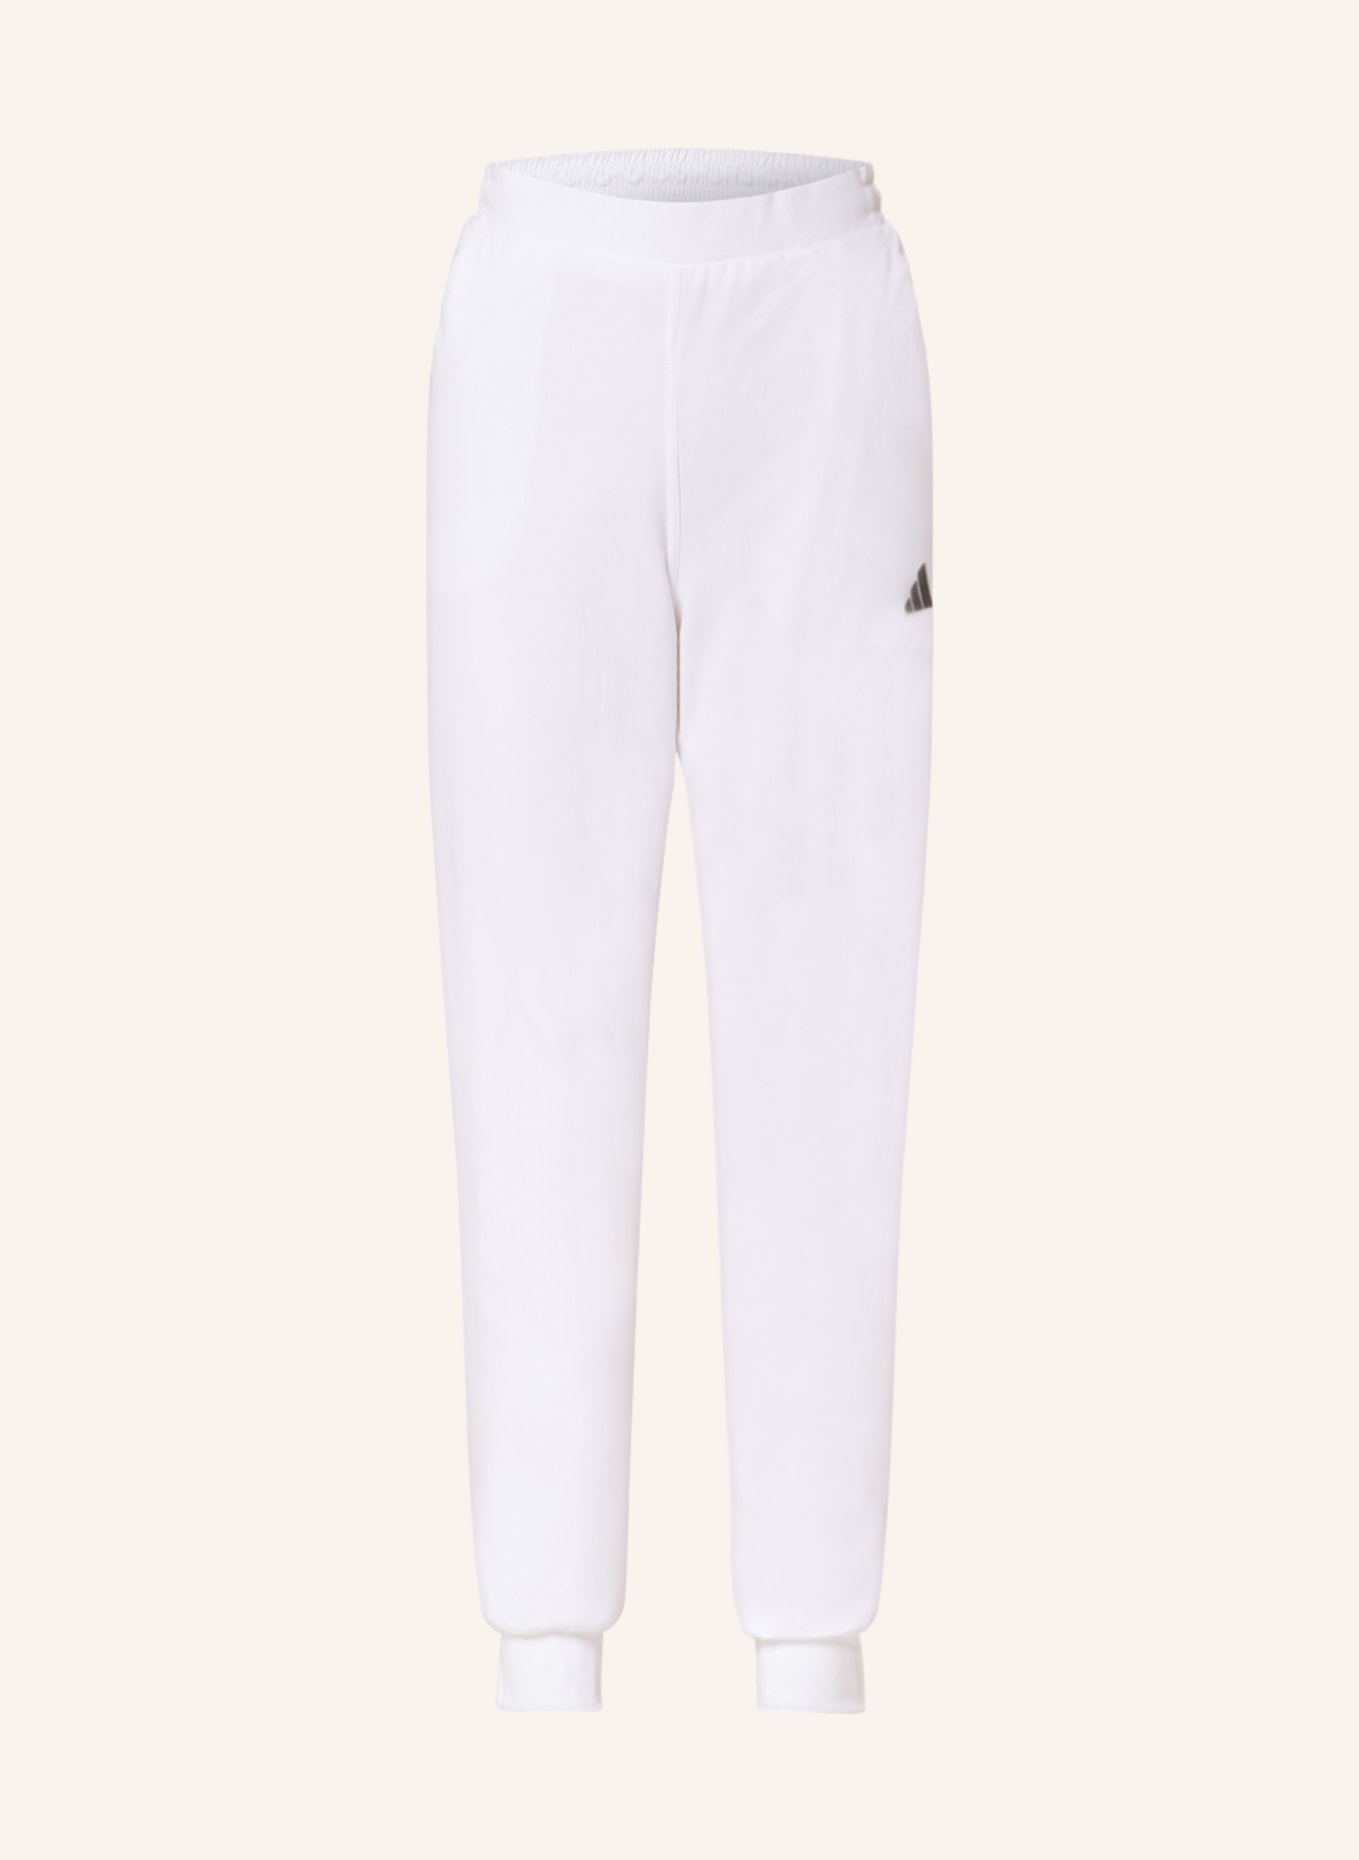 Nike Men's Heritage Suit Pant (White) | RacquetGuys.ca